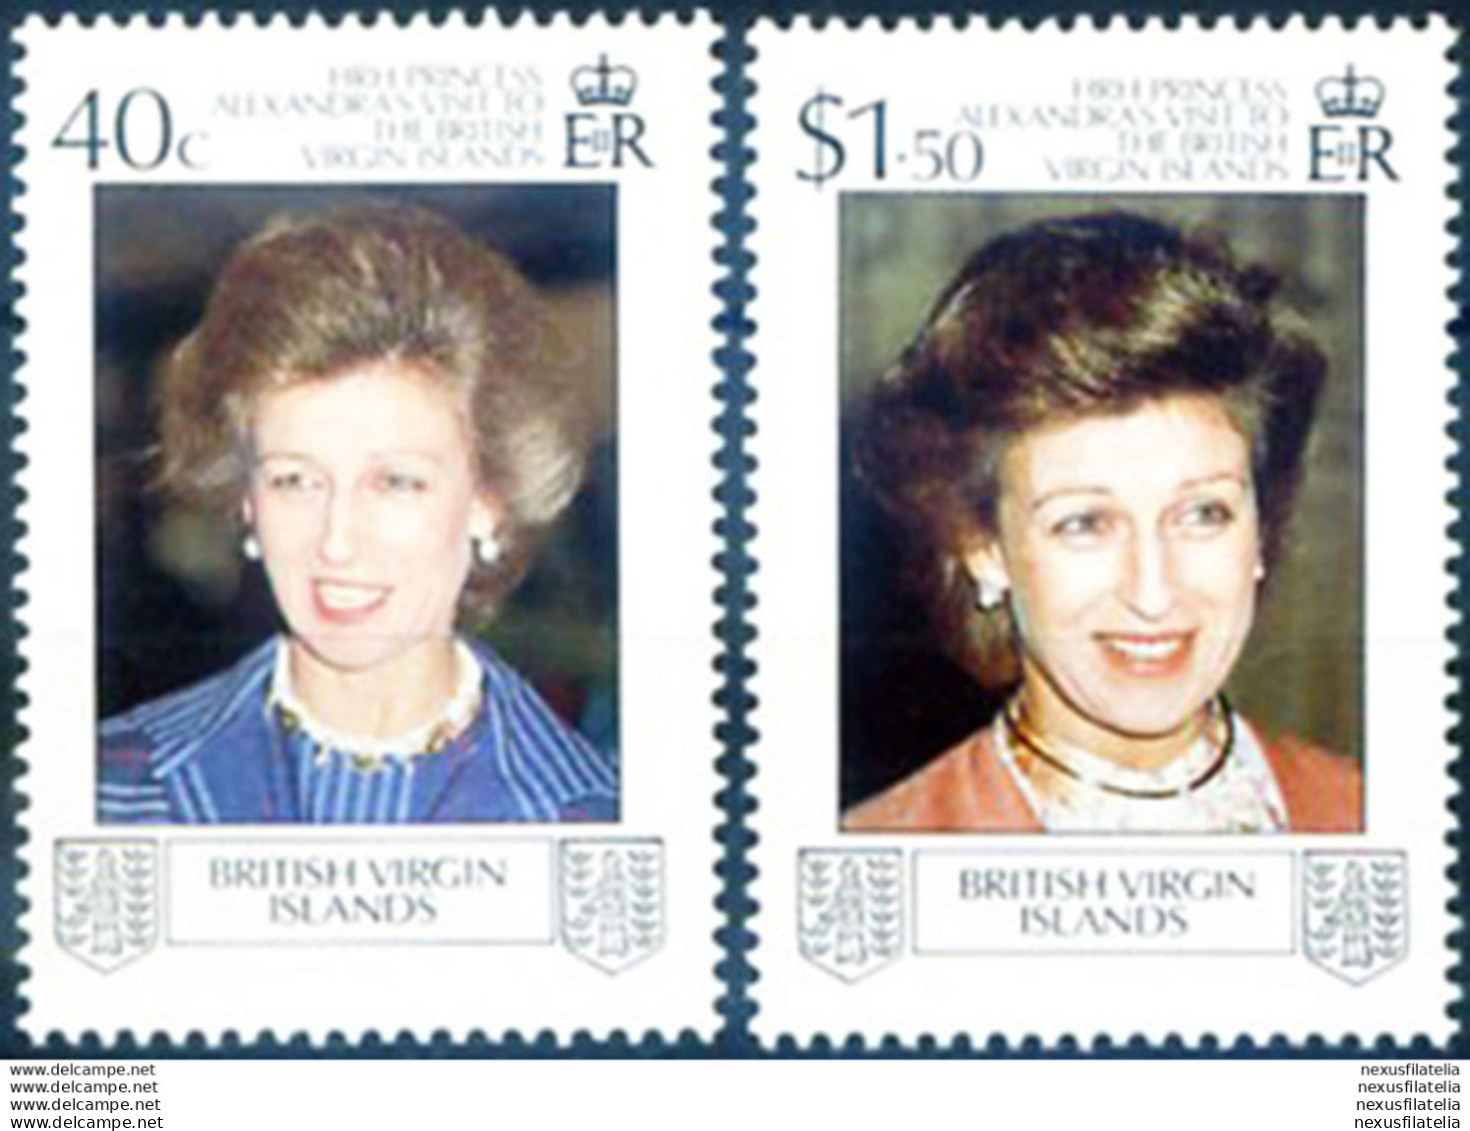 Famiglia Reale 1988. - British Virgin Islands